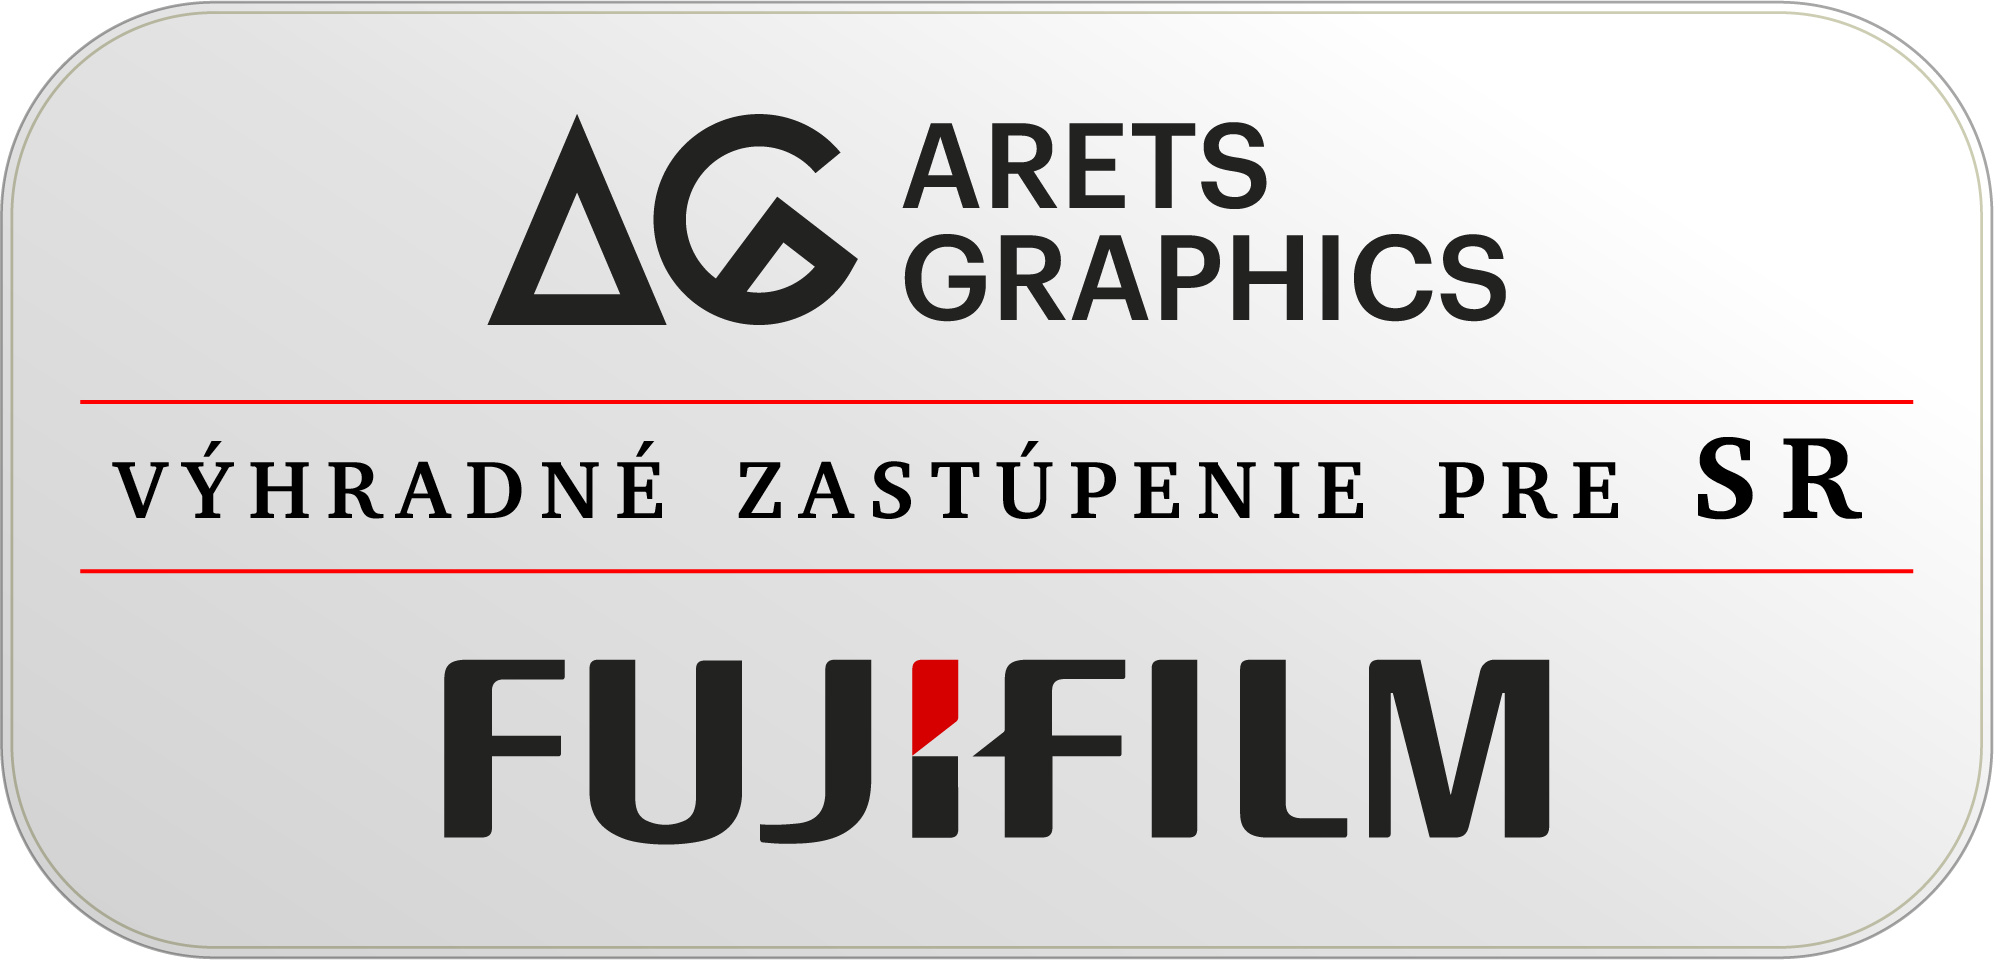 Arets, Fujifilm